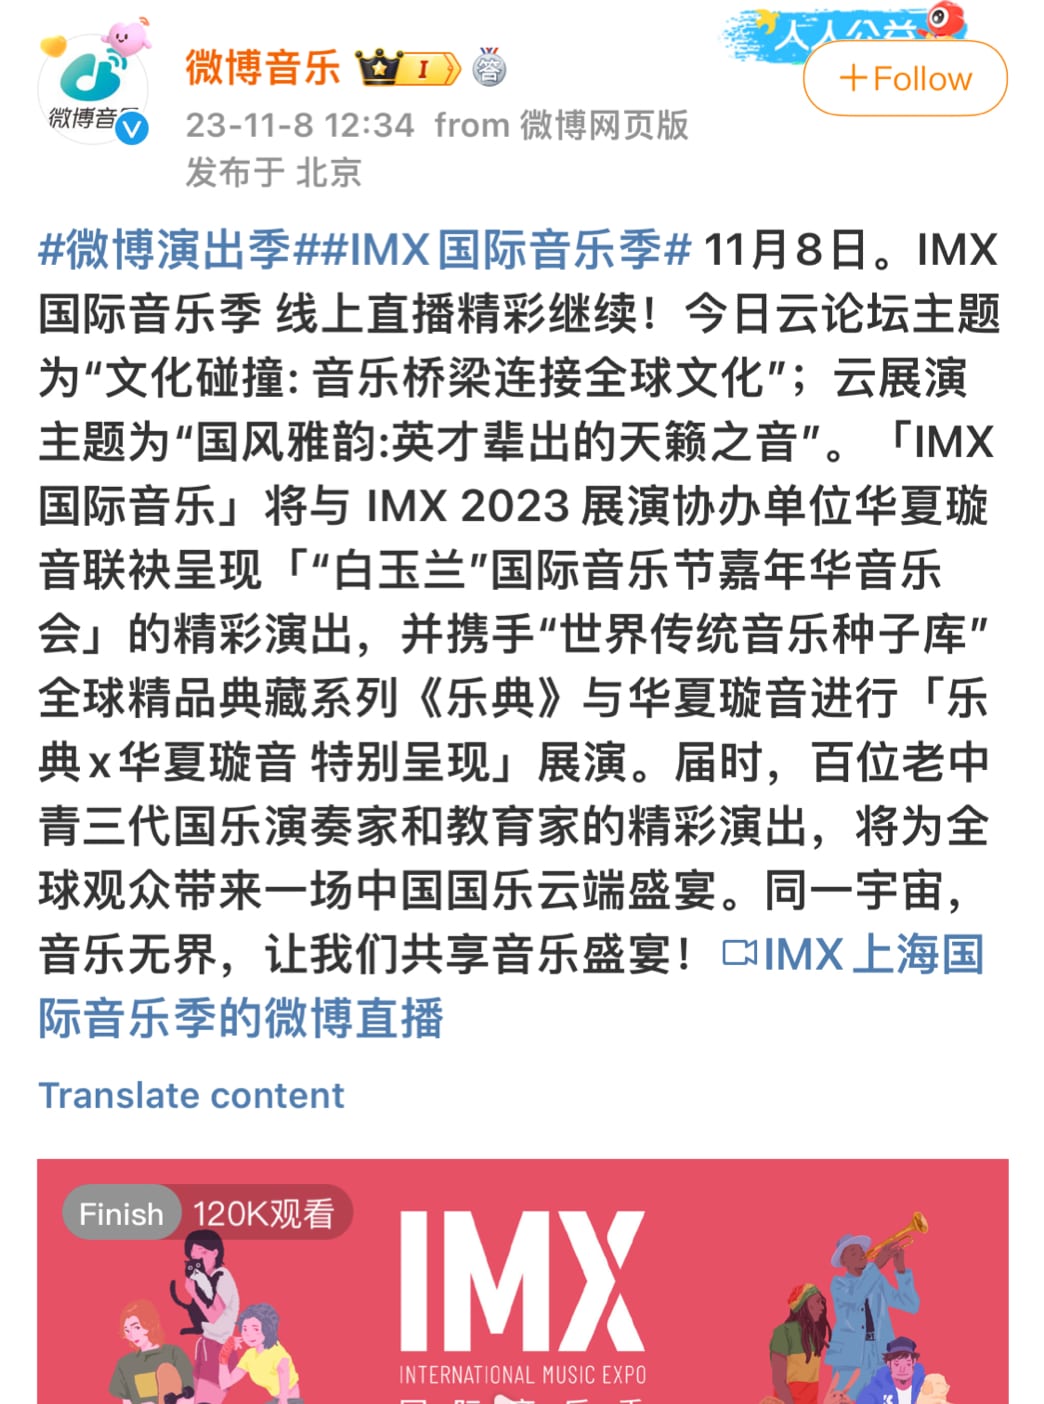 IMX 2023 Media Response - 08